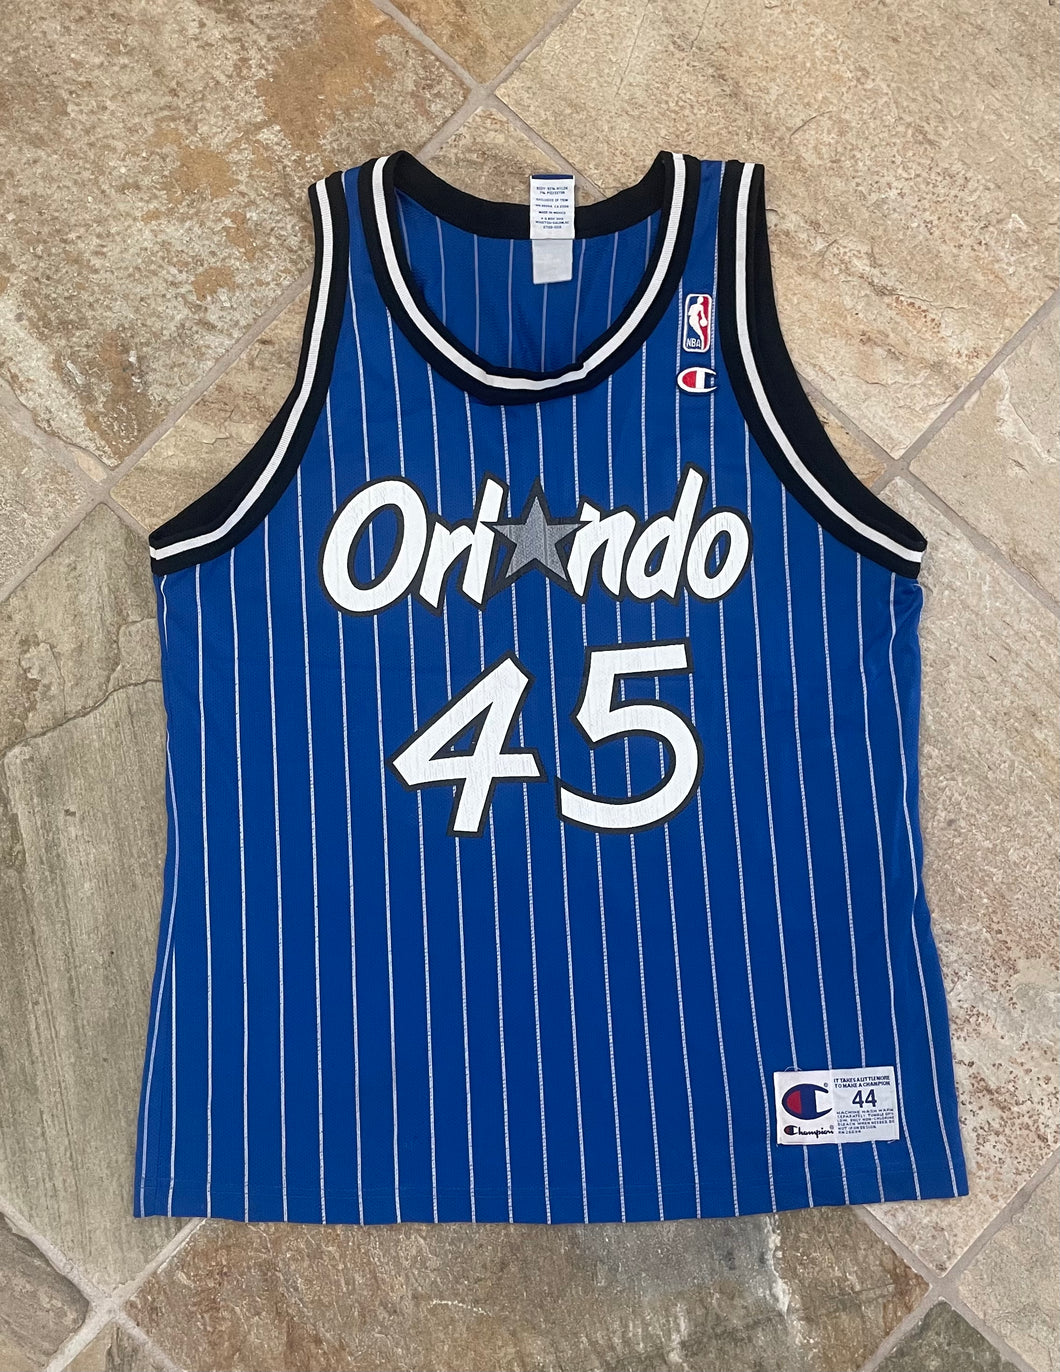 Vintage Orlando Magic Bo Outlaw Champion Basketball Jersey, Size 44, Large